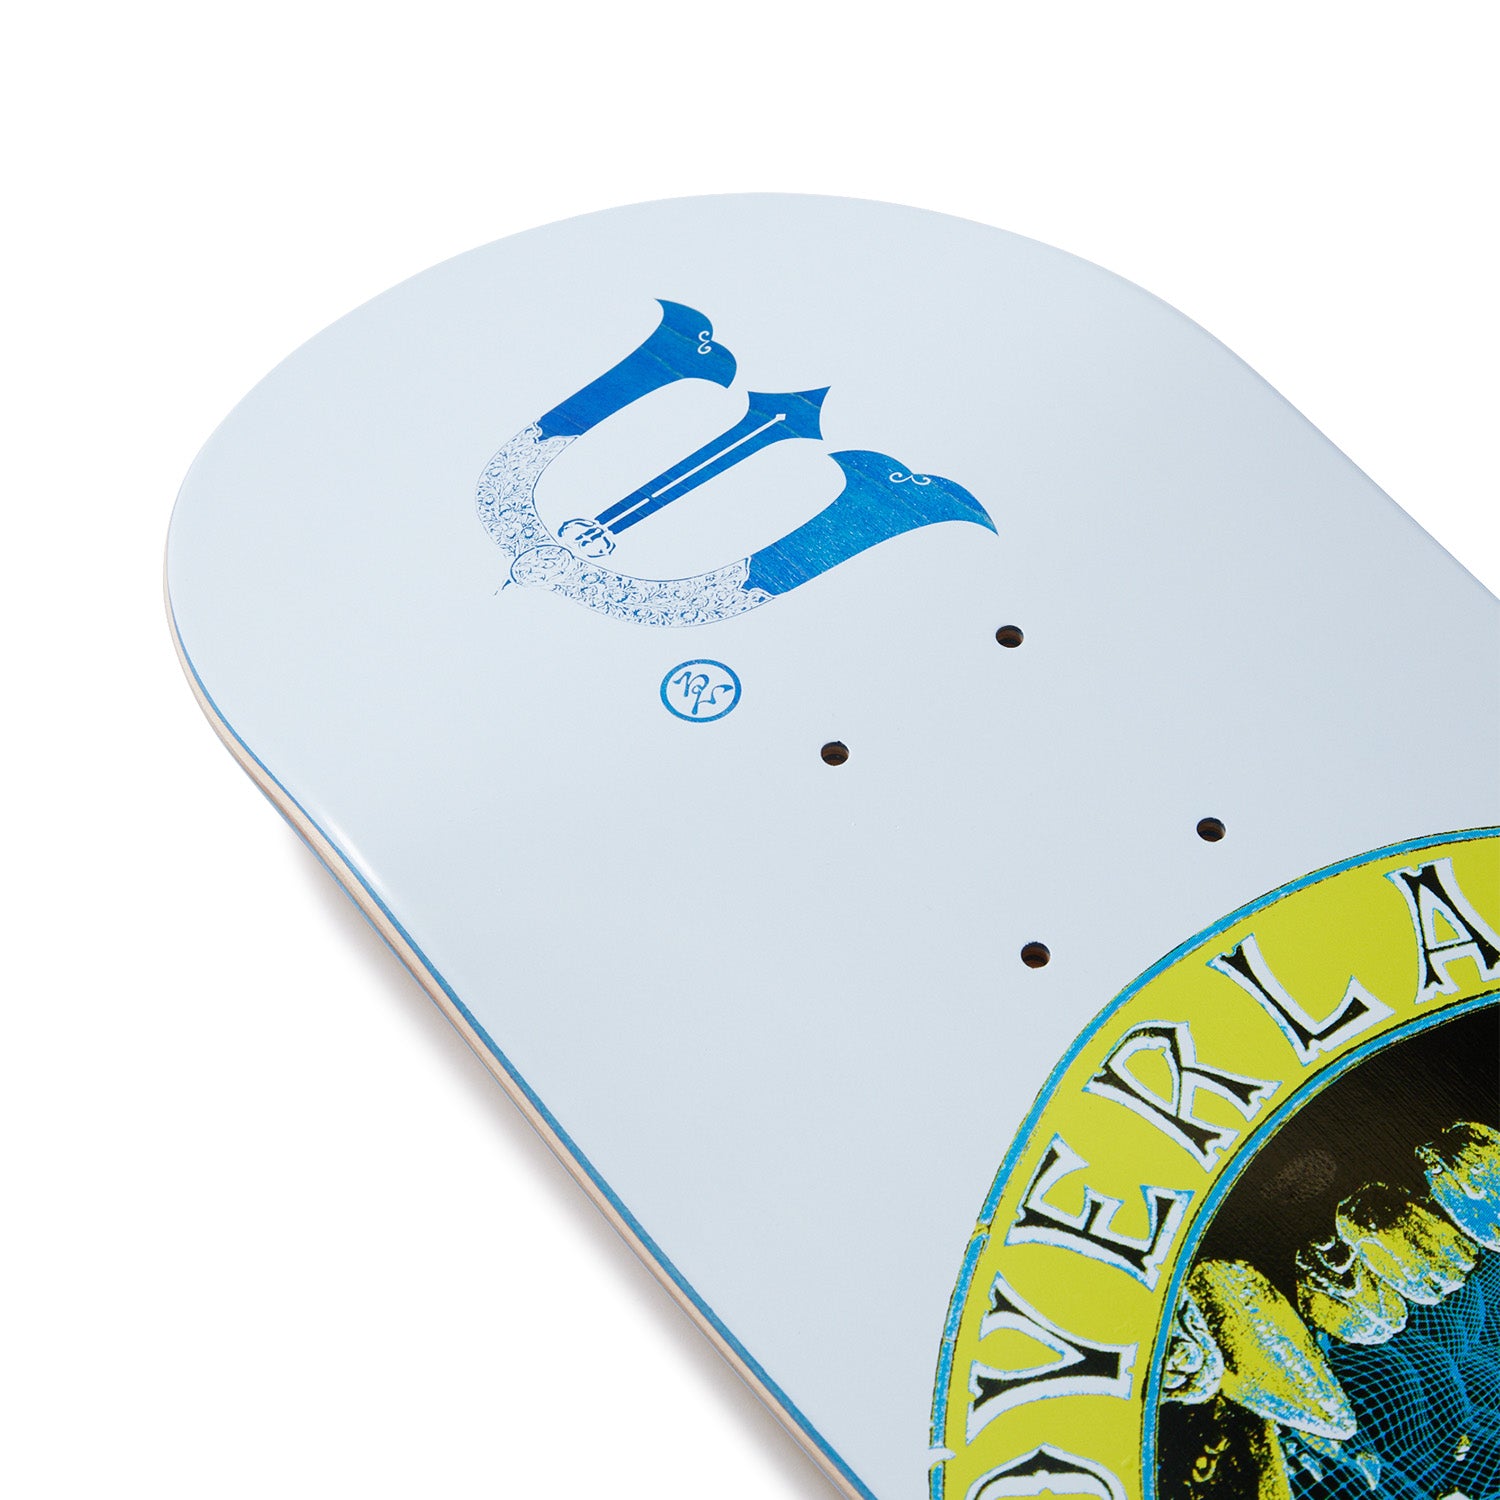 【8.0】Evisen Skateboards - Overland